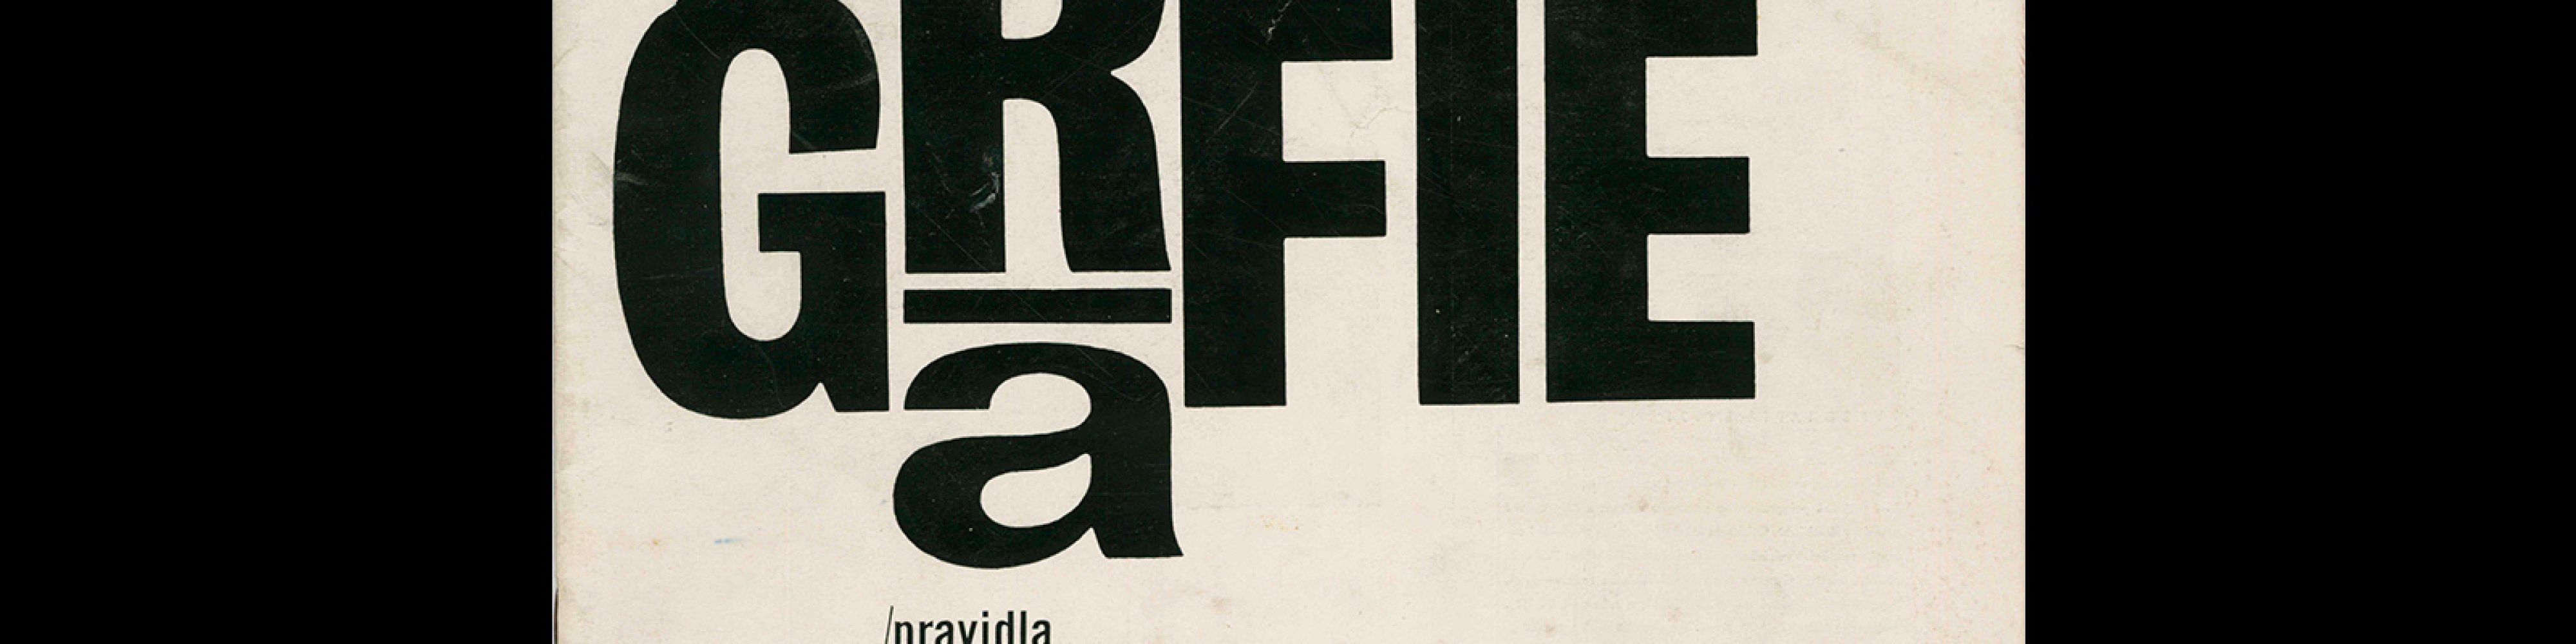 Typografia, ročník 67, 02, 1964. Cover design by Oldřich Hlavsa